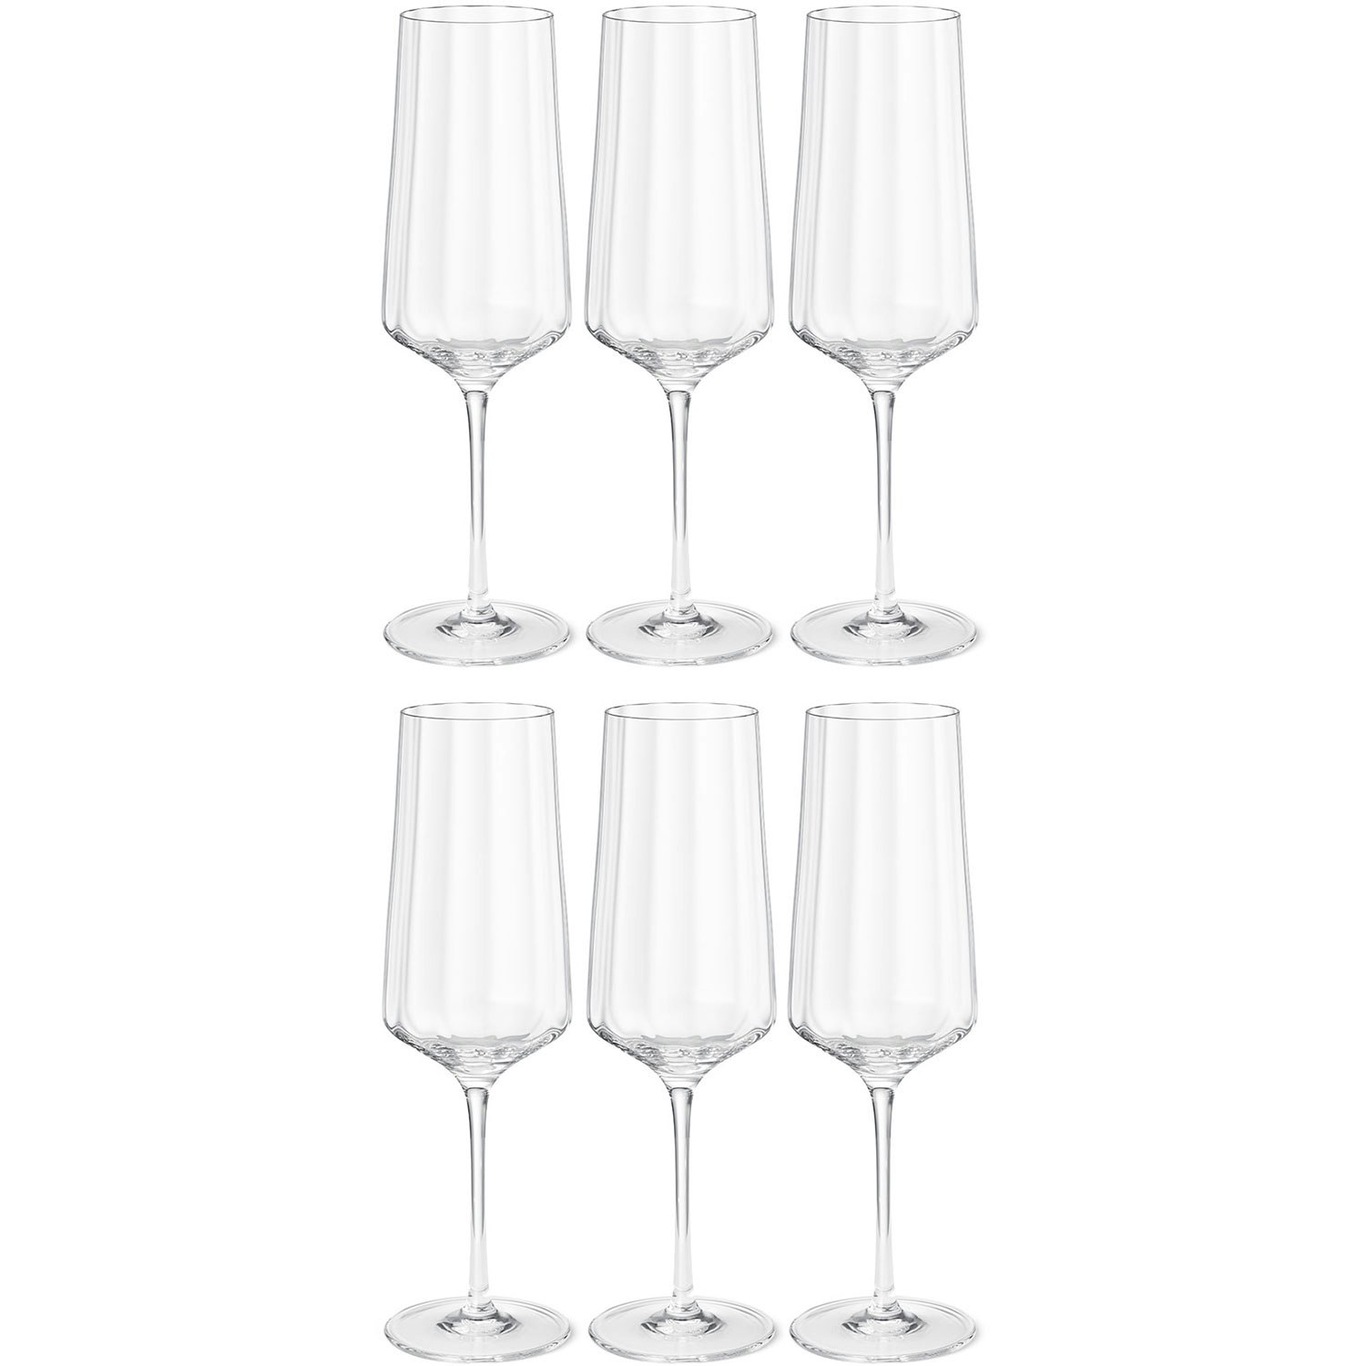 https://royaldesign.com/image/10/georg-jensen-bernadotte-champagne-flute-glass-xln-27-cl-6-pcs-2?w=800&quality=80